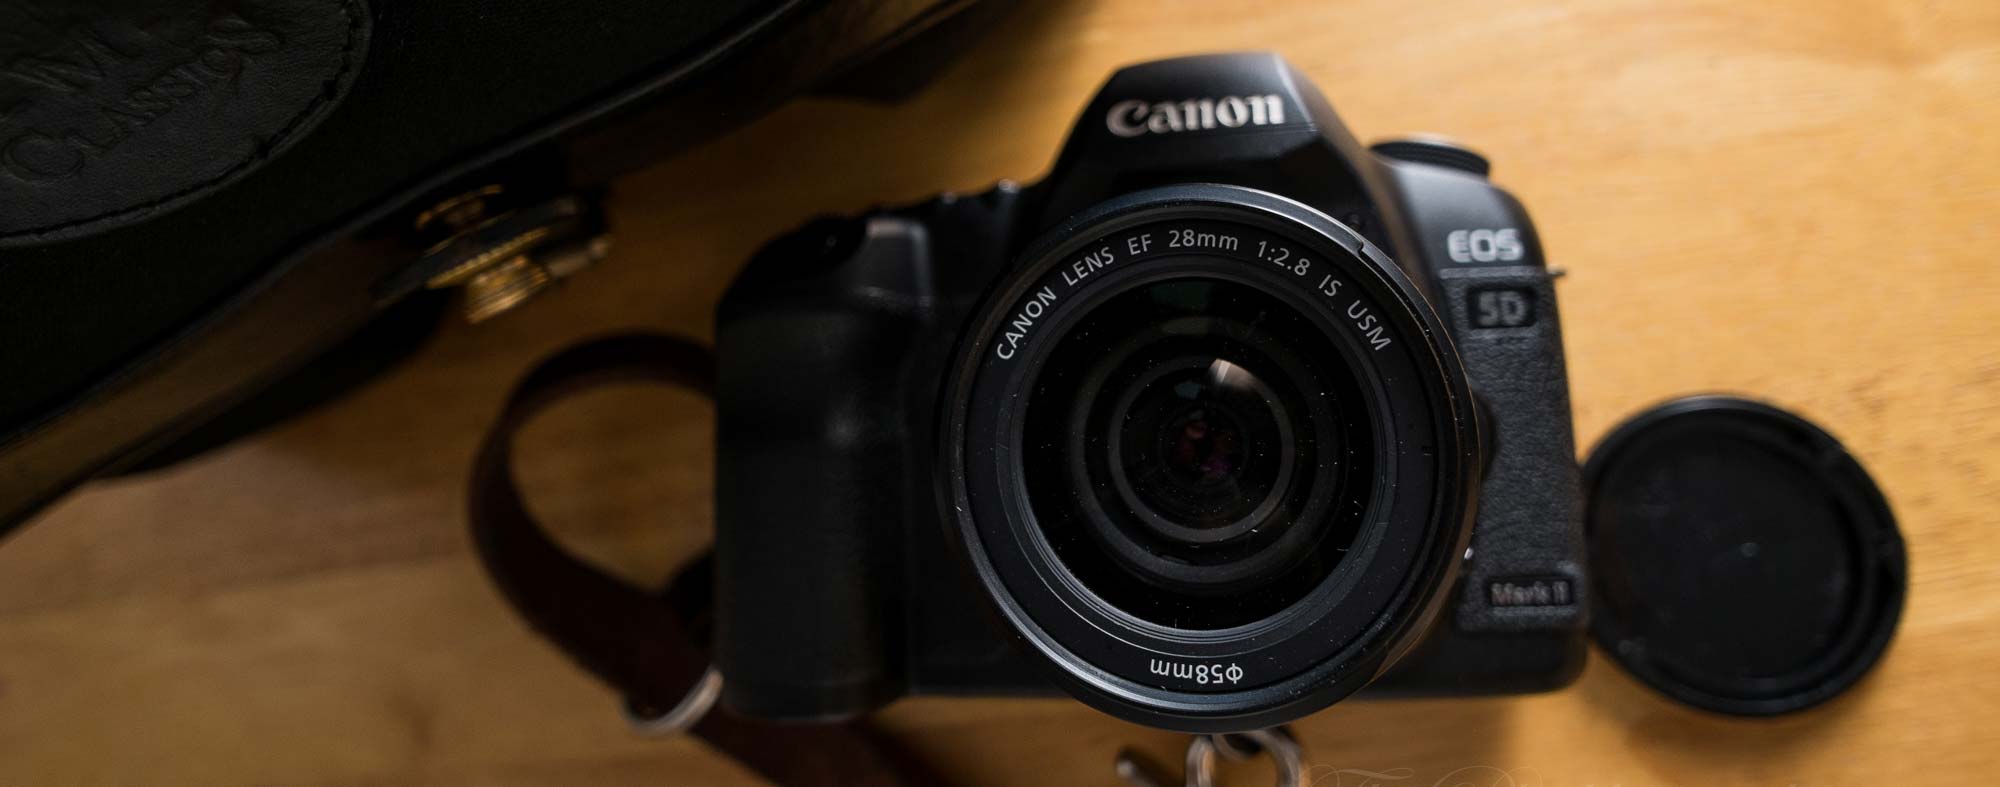 jual Canon EF 28mm f/2.8 IS USM